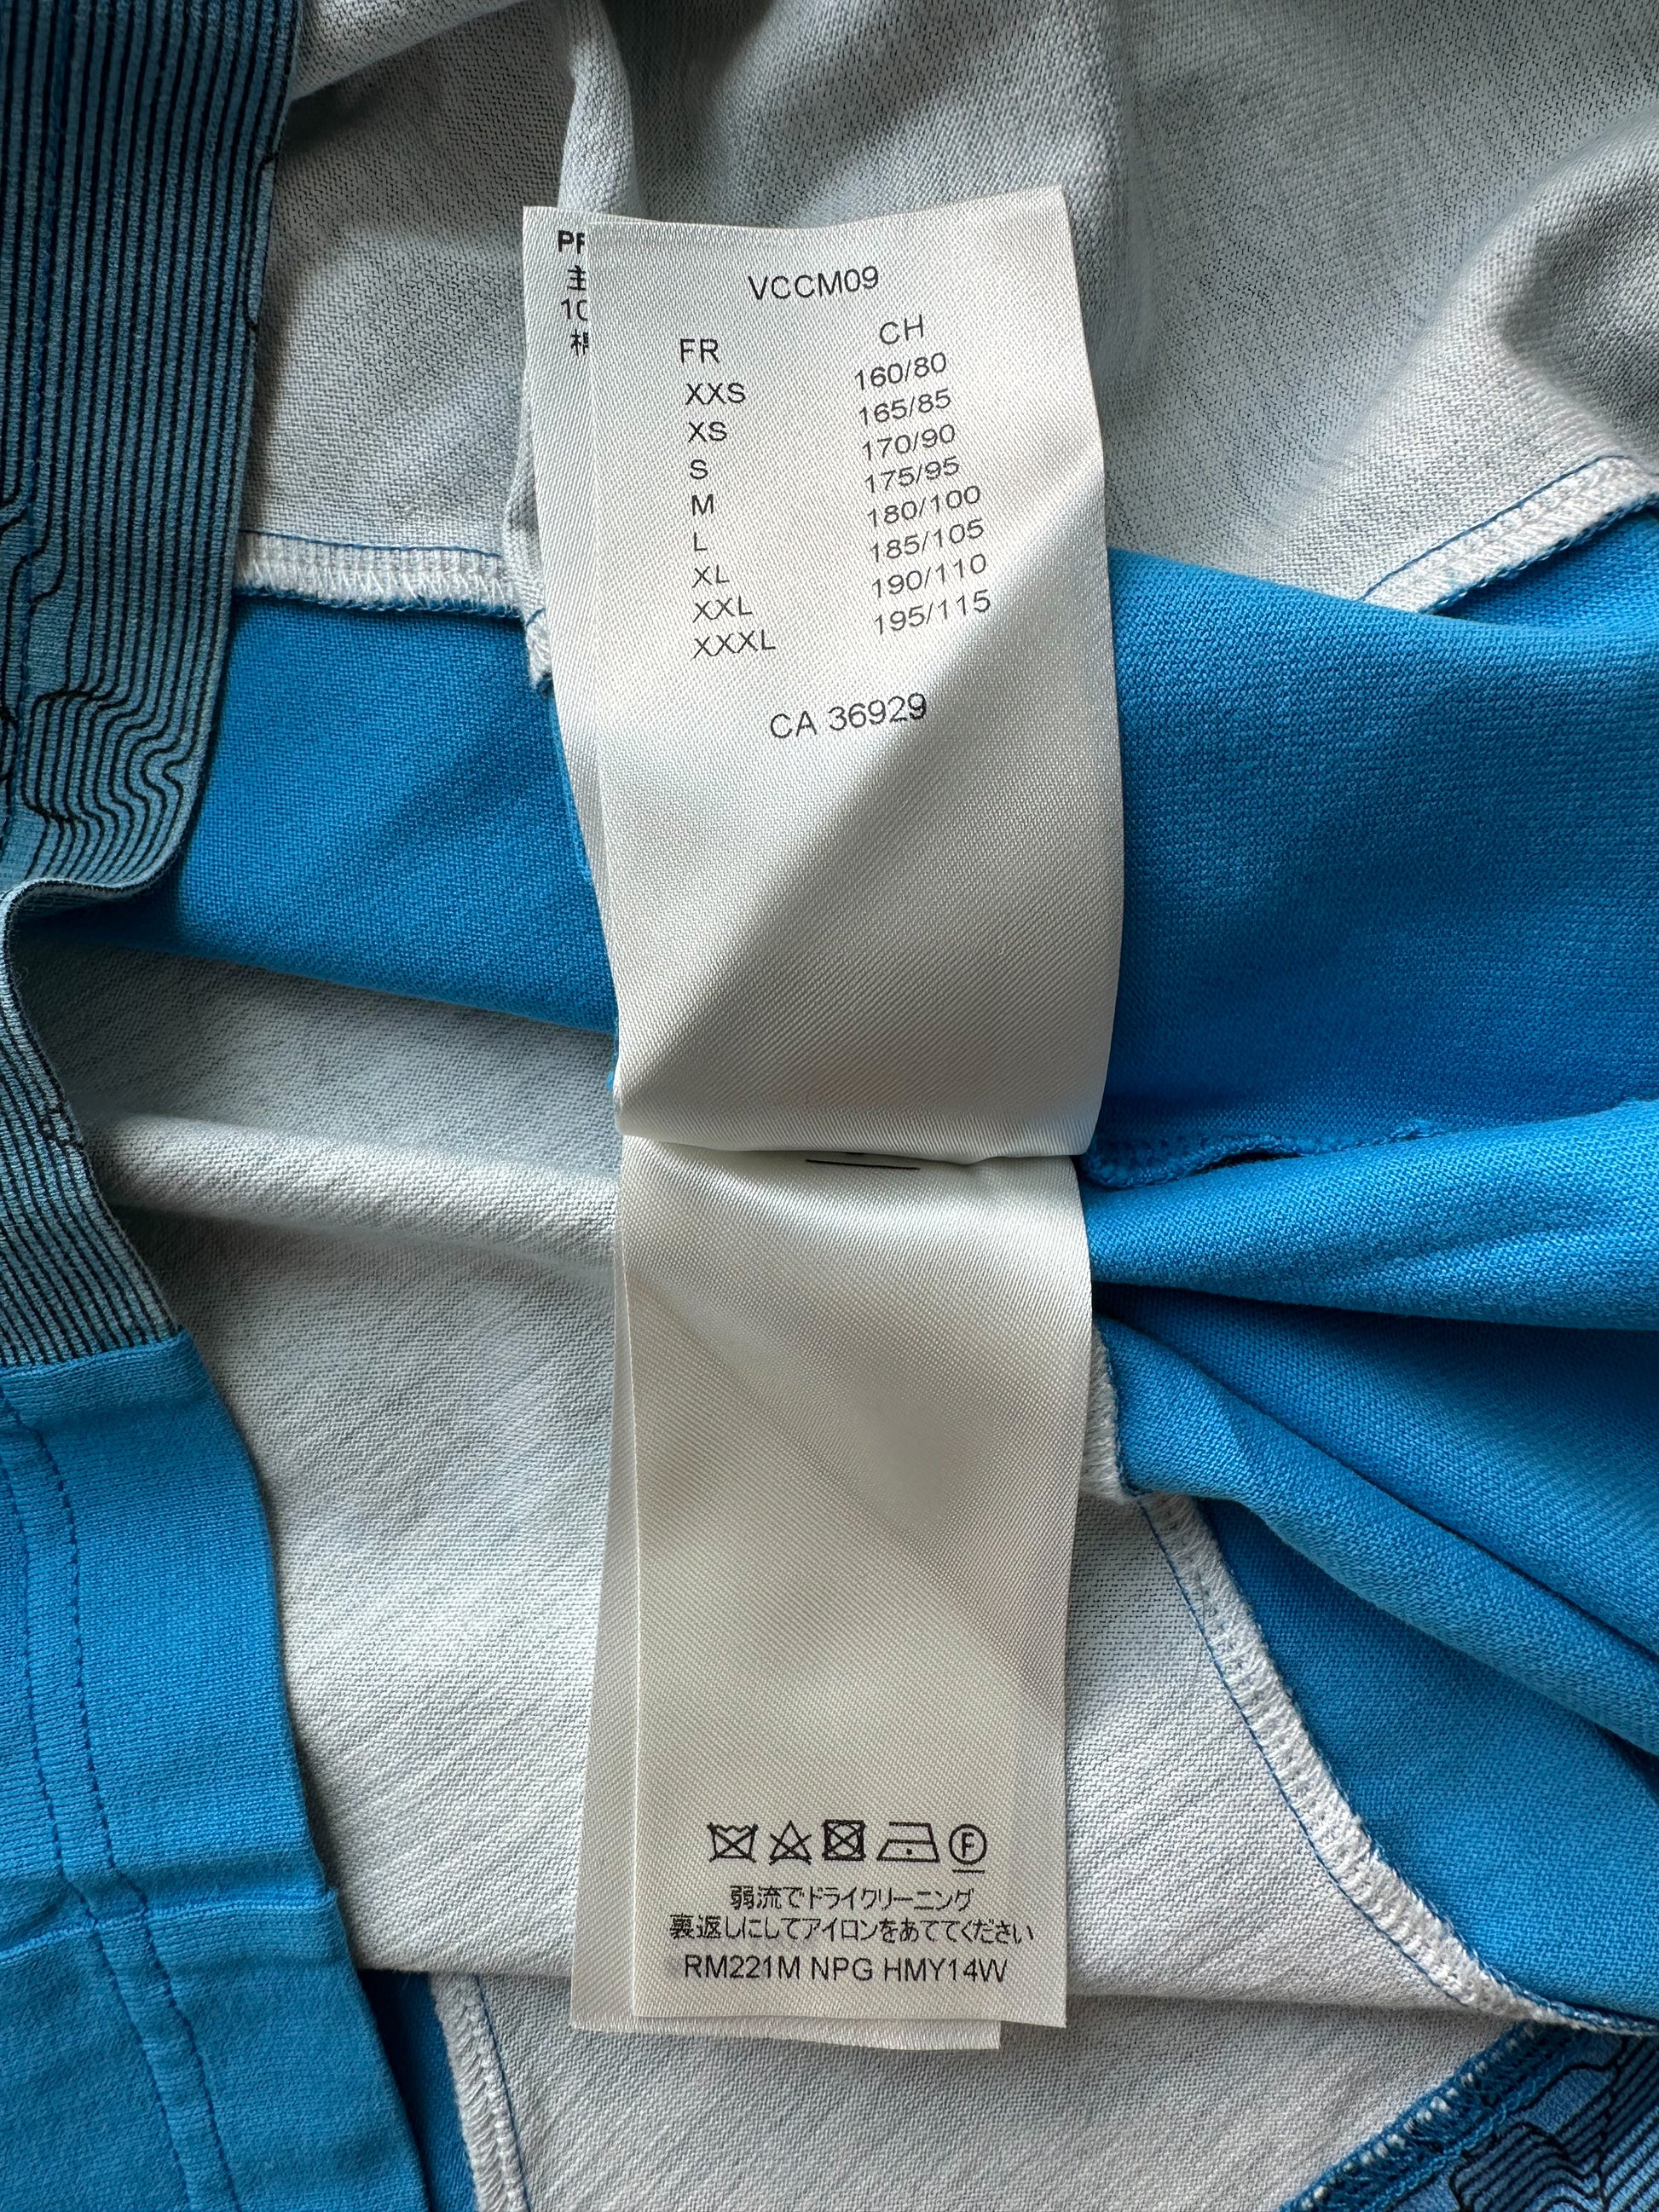 Louis Vuitton Louis Vuitton 2054 Intarsia Printed T-Shirt Blue/Multi for Men